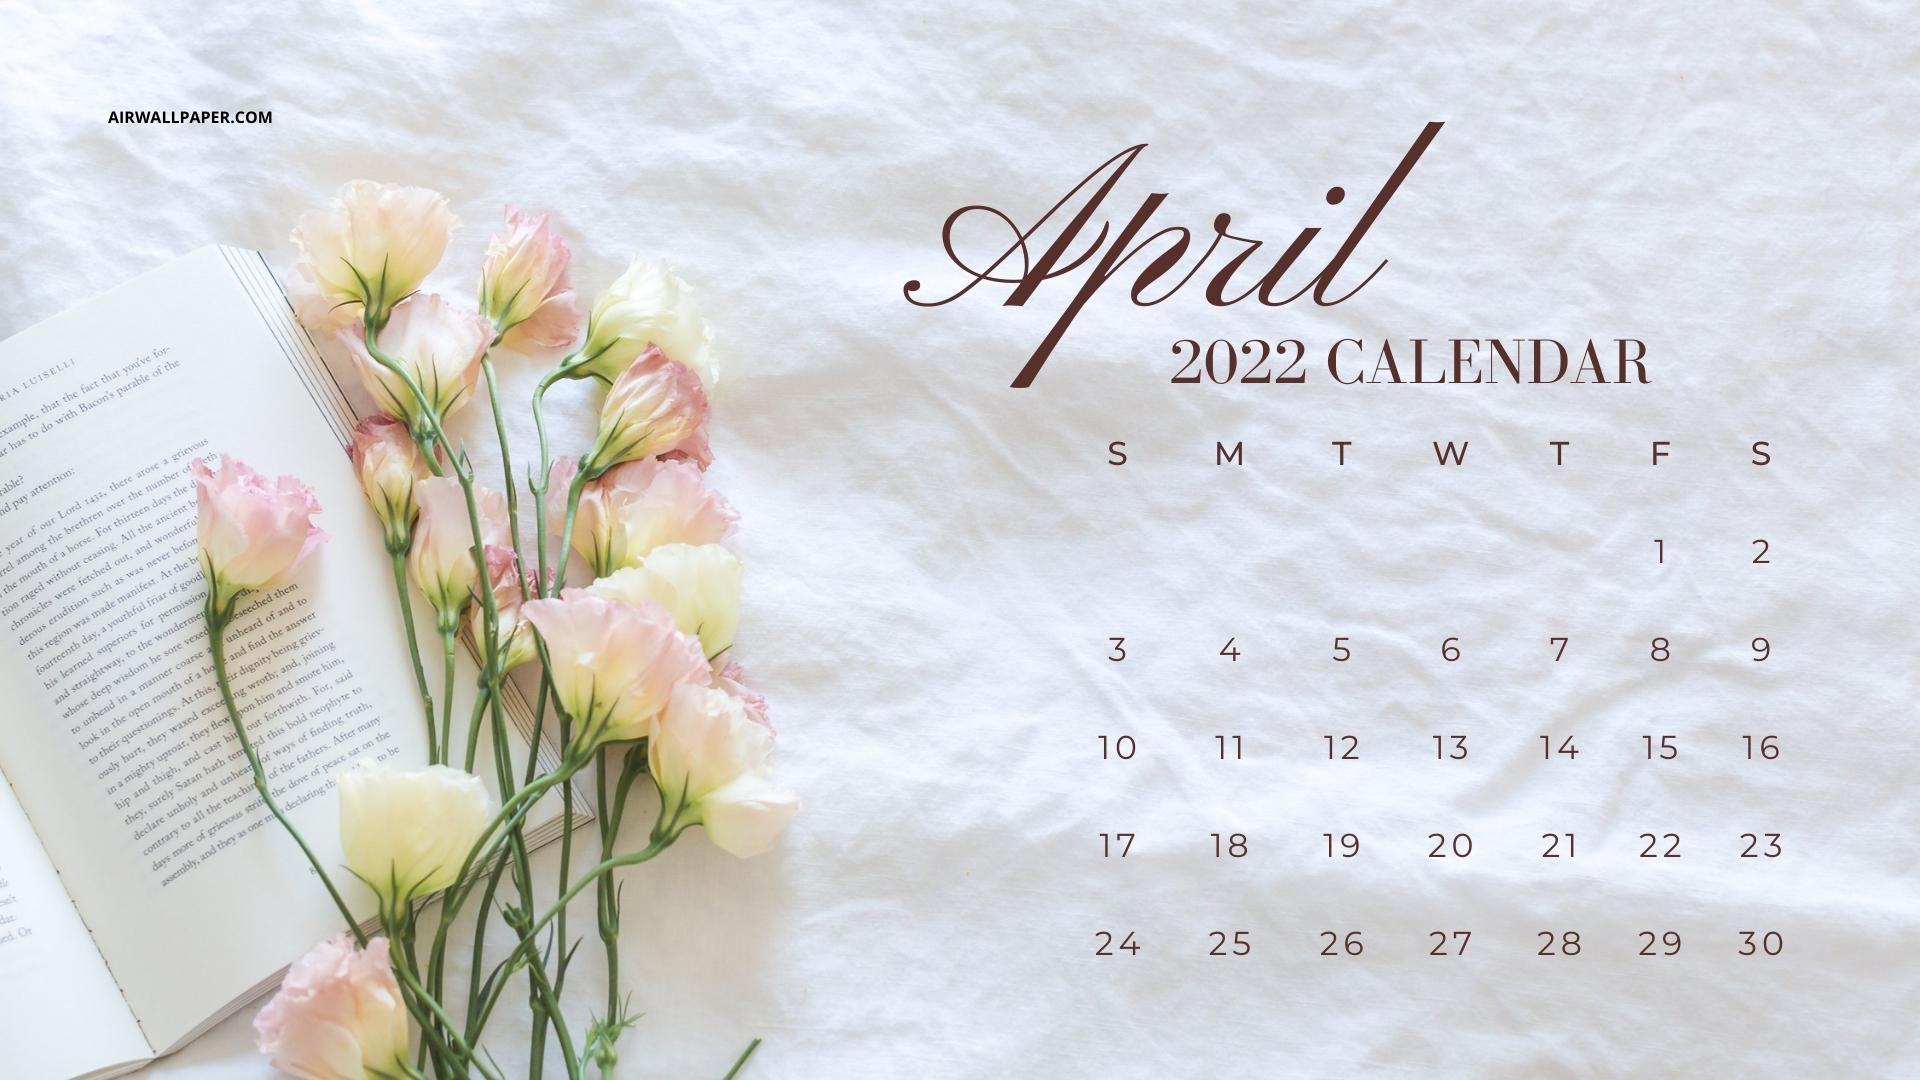 April 2022 Calendar Wallpapers - Top Free April 2022 Calendar ...